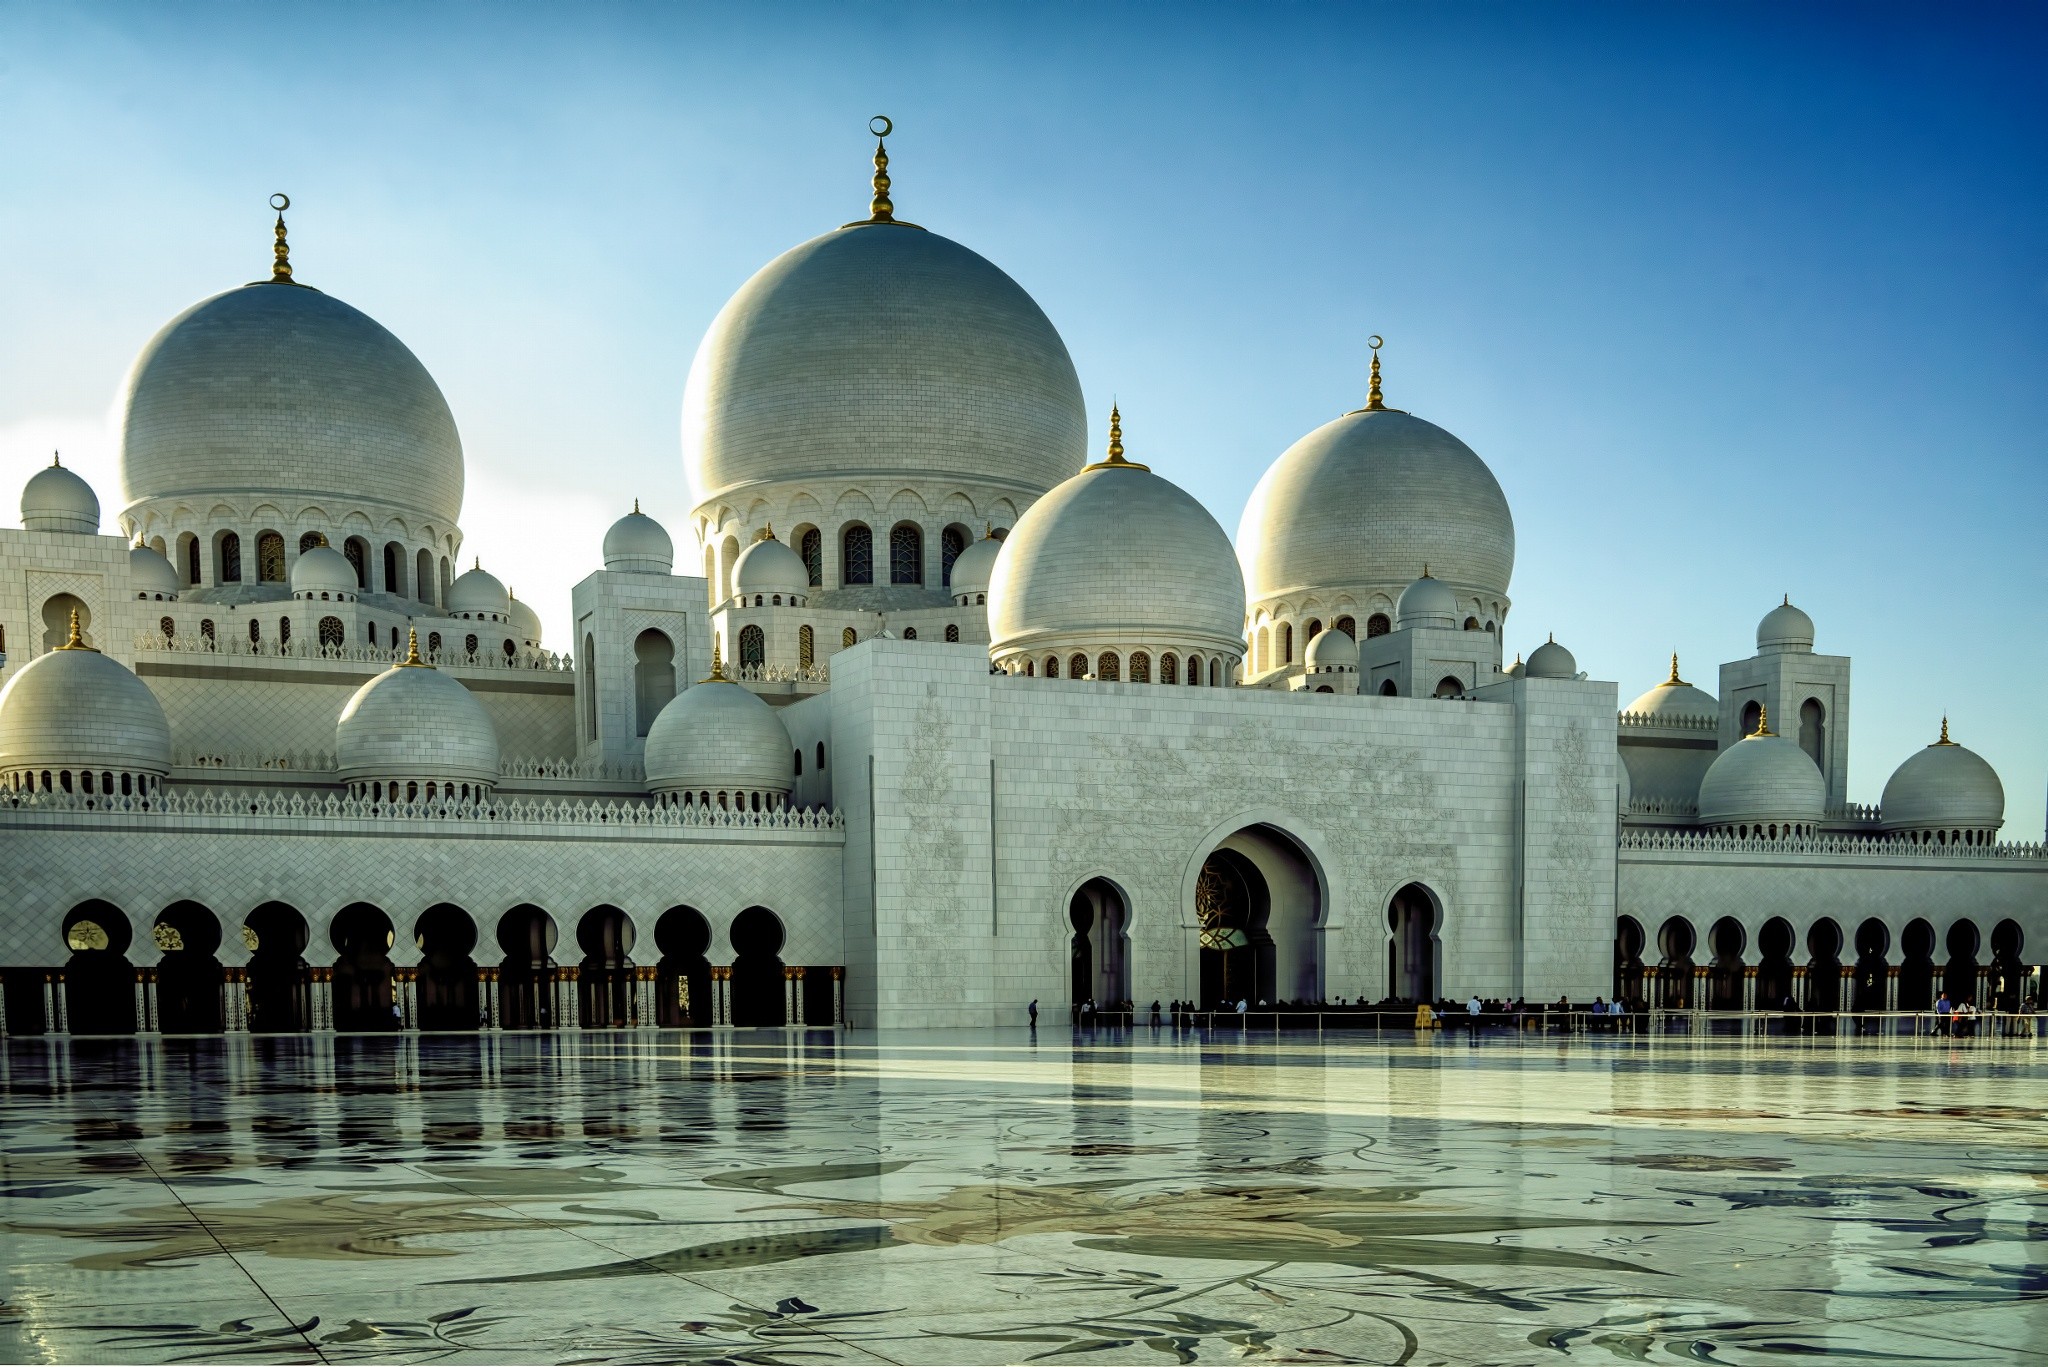 General 2048x1367 architecture Dubai mosque Abu Dhabi landmark United Arab Emirates